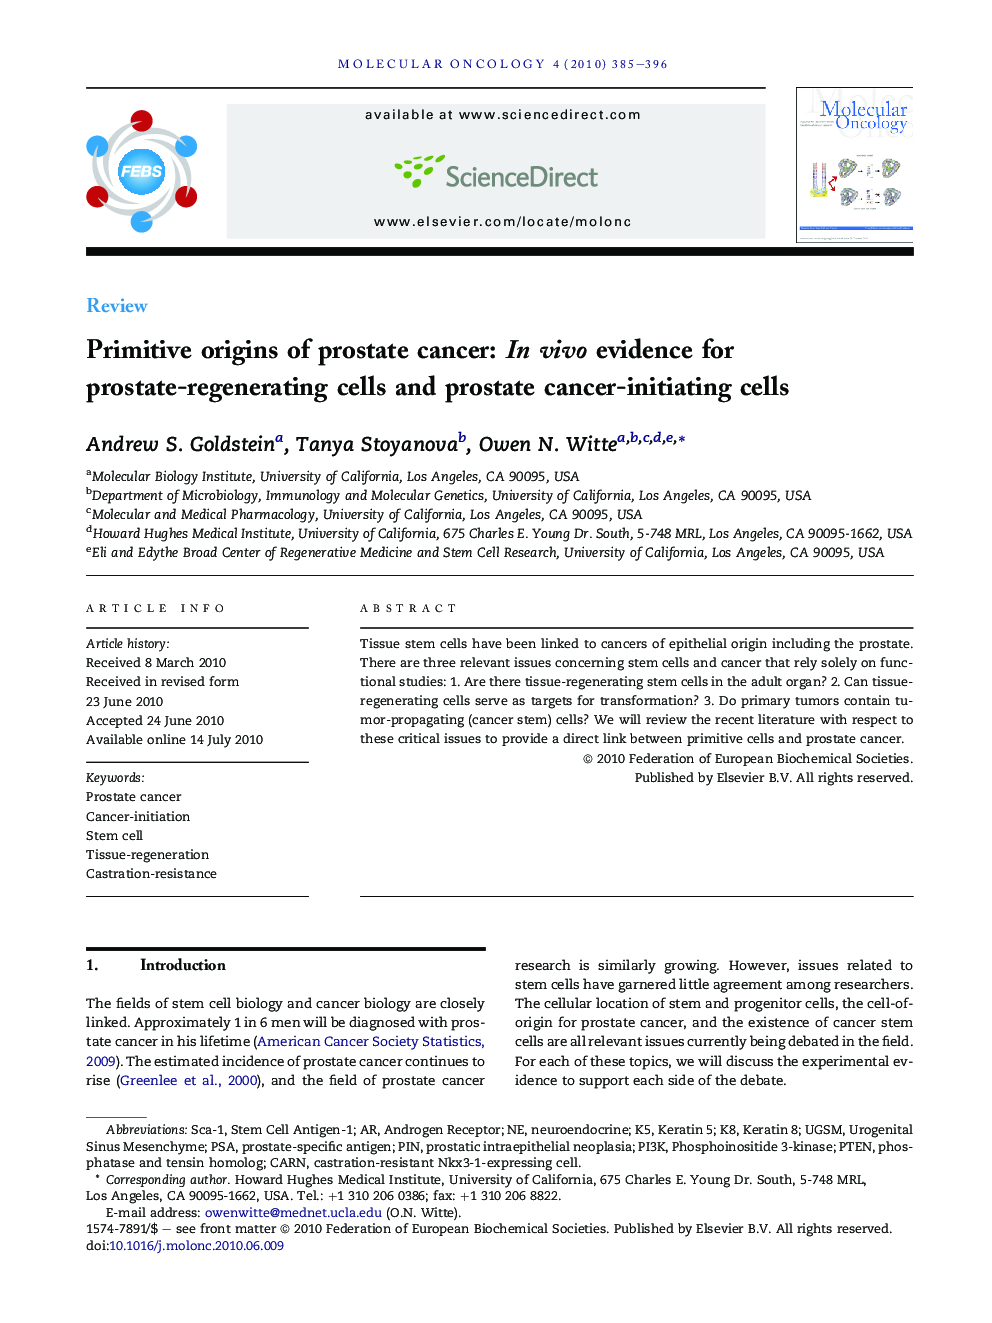 Primitive origins of prostate cancer: In vivo evidence for prostate-regenerating cells and prostate cancer-initiating cells